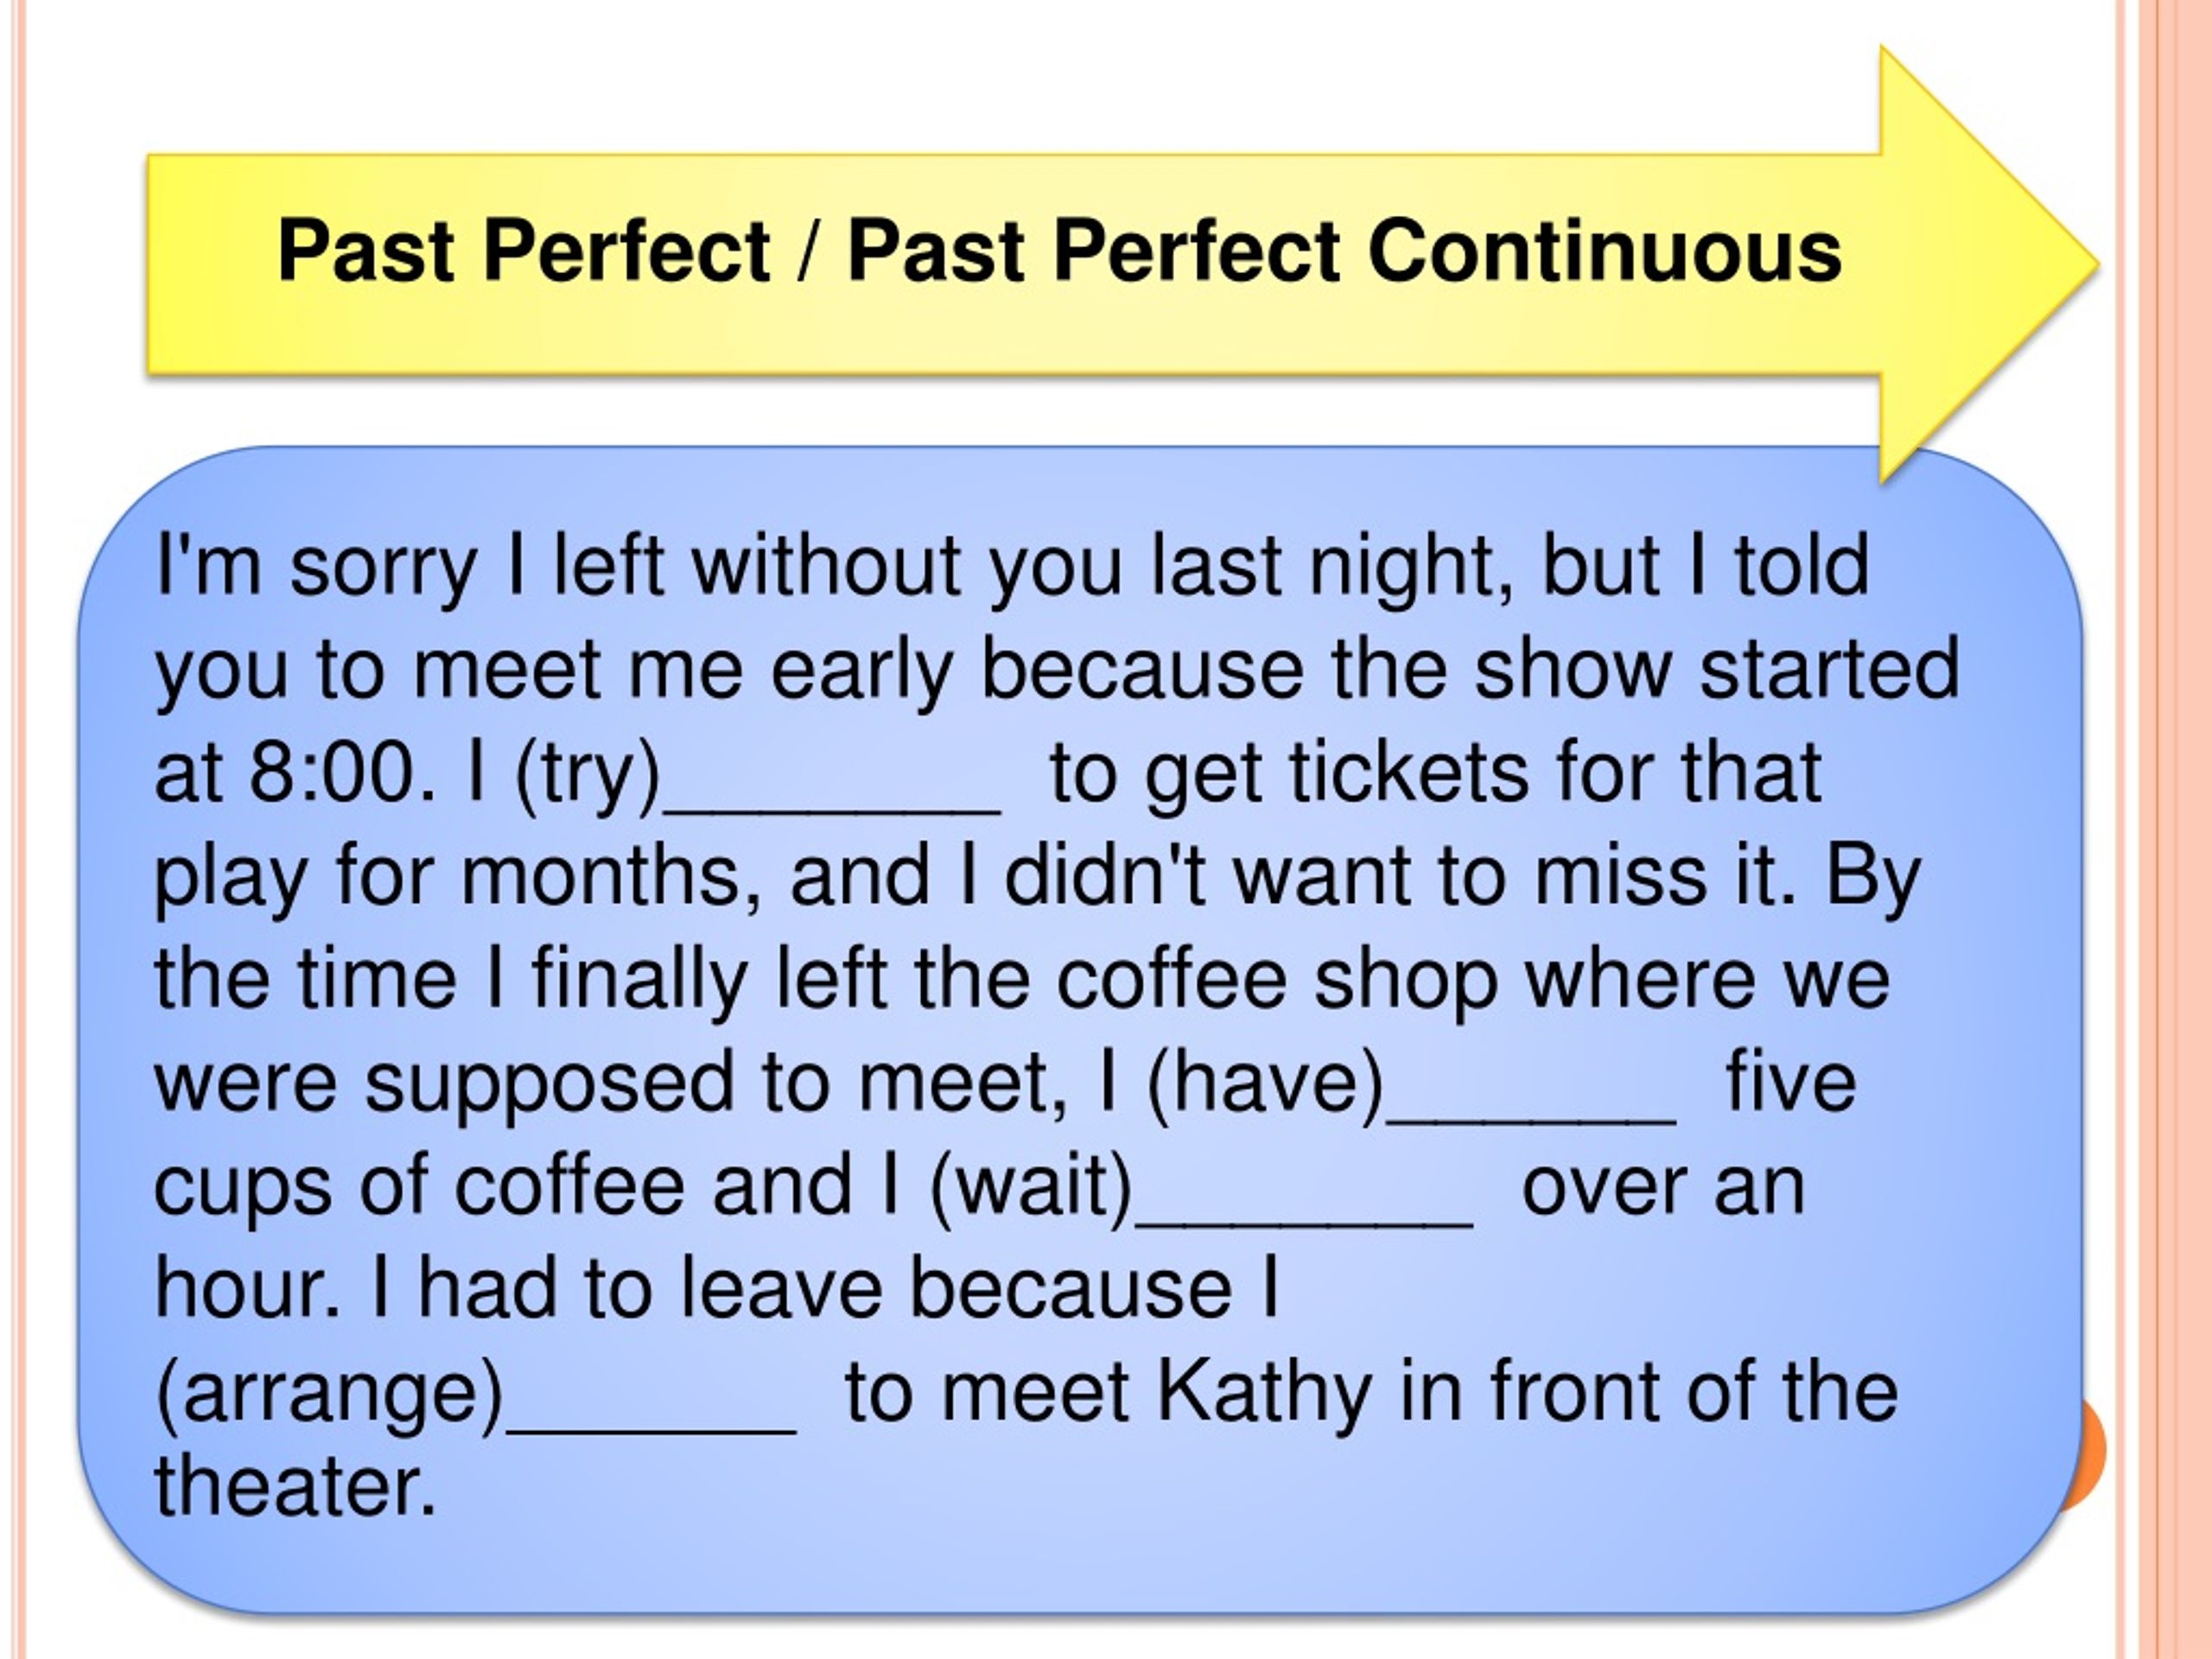 Past perfect tense ответы. Past perfect past perfect Continuous упражнения 8 класс. Past perfect past perfect Continuous упражнения. Past perfect Continuous упражнения. Past perfect упражнения.